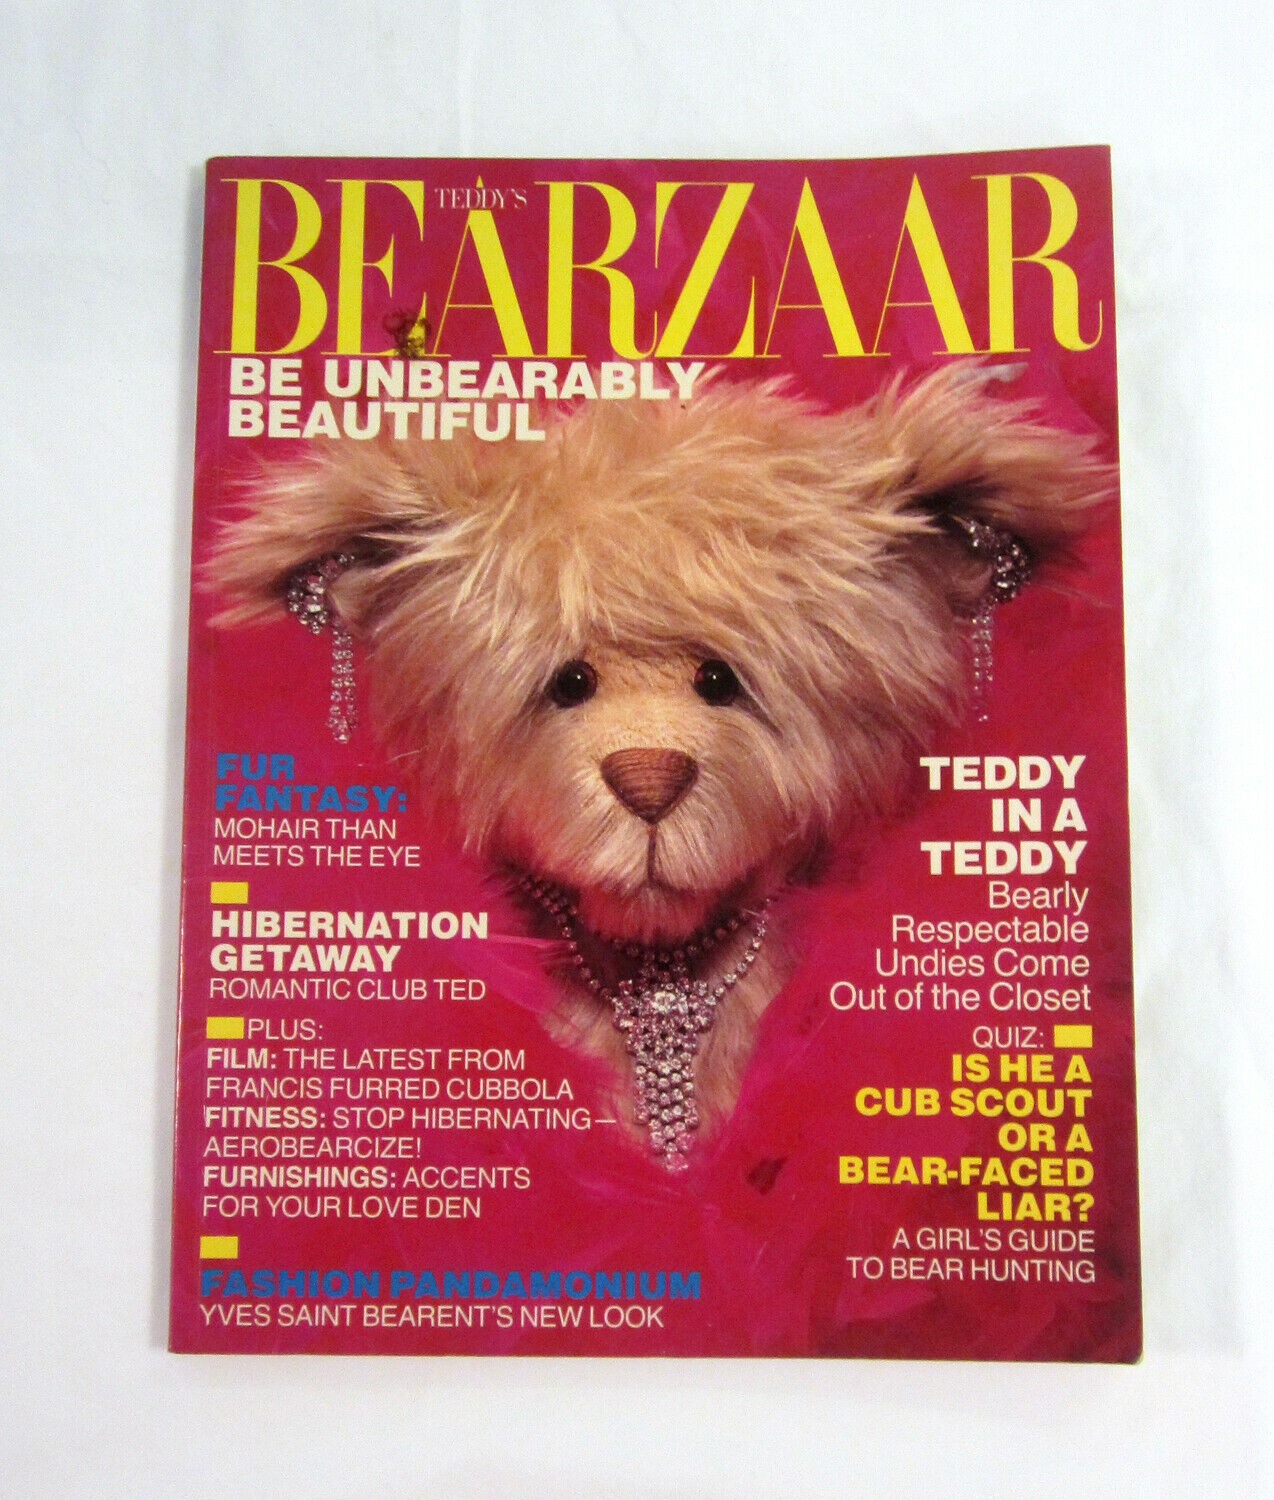 Teddy's Bearzaar Magazine By Ted Menton 1988 Parody Harper's Bazaar With Bears